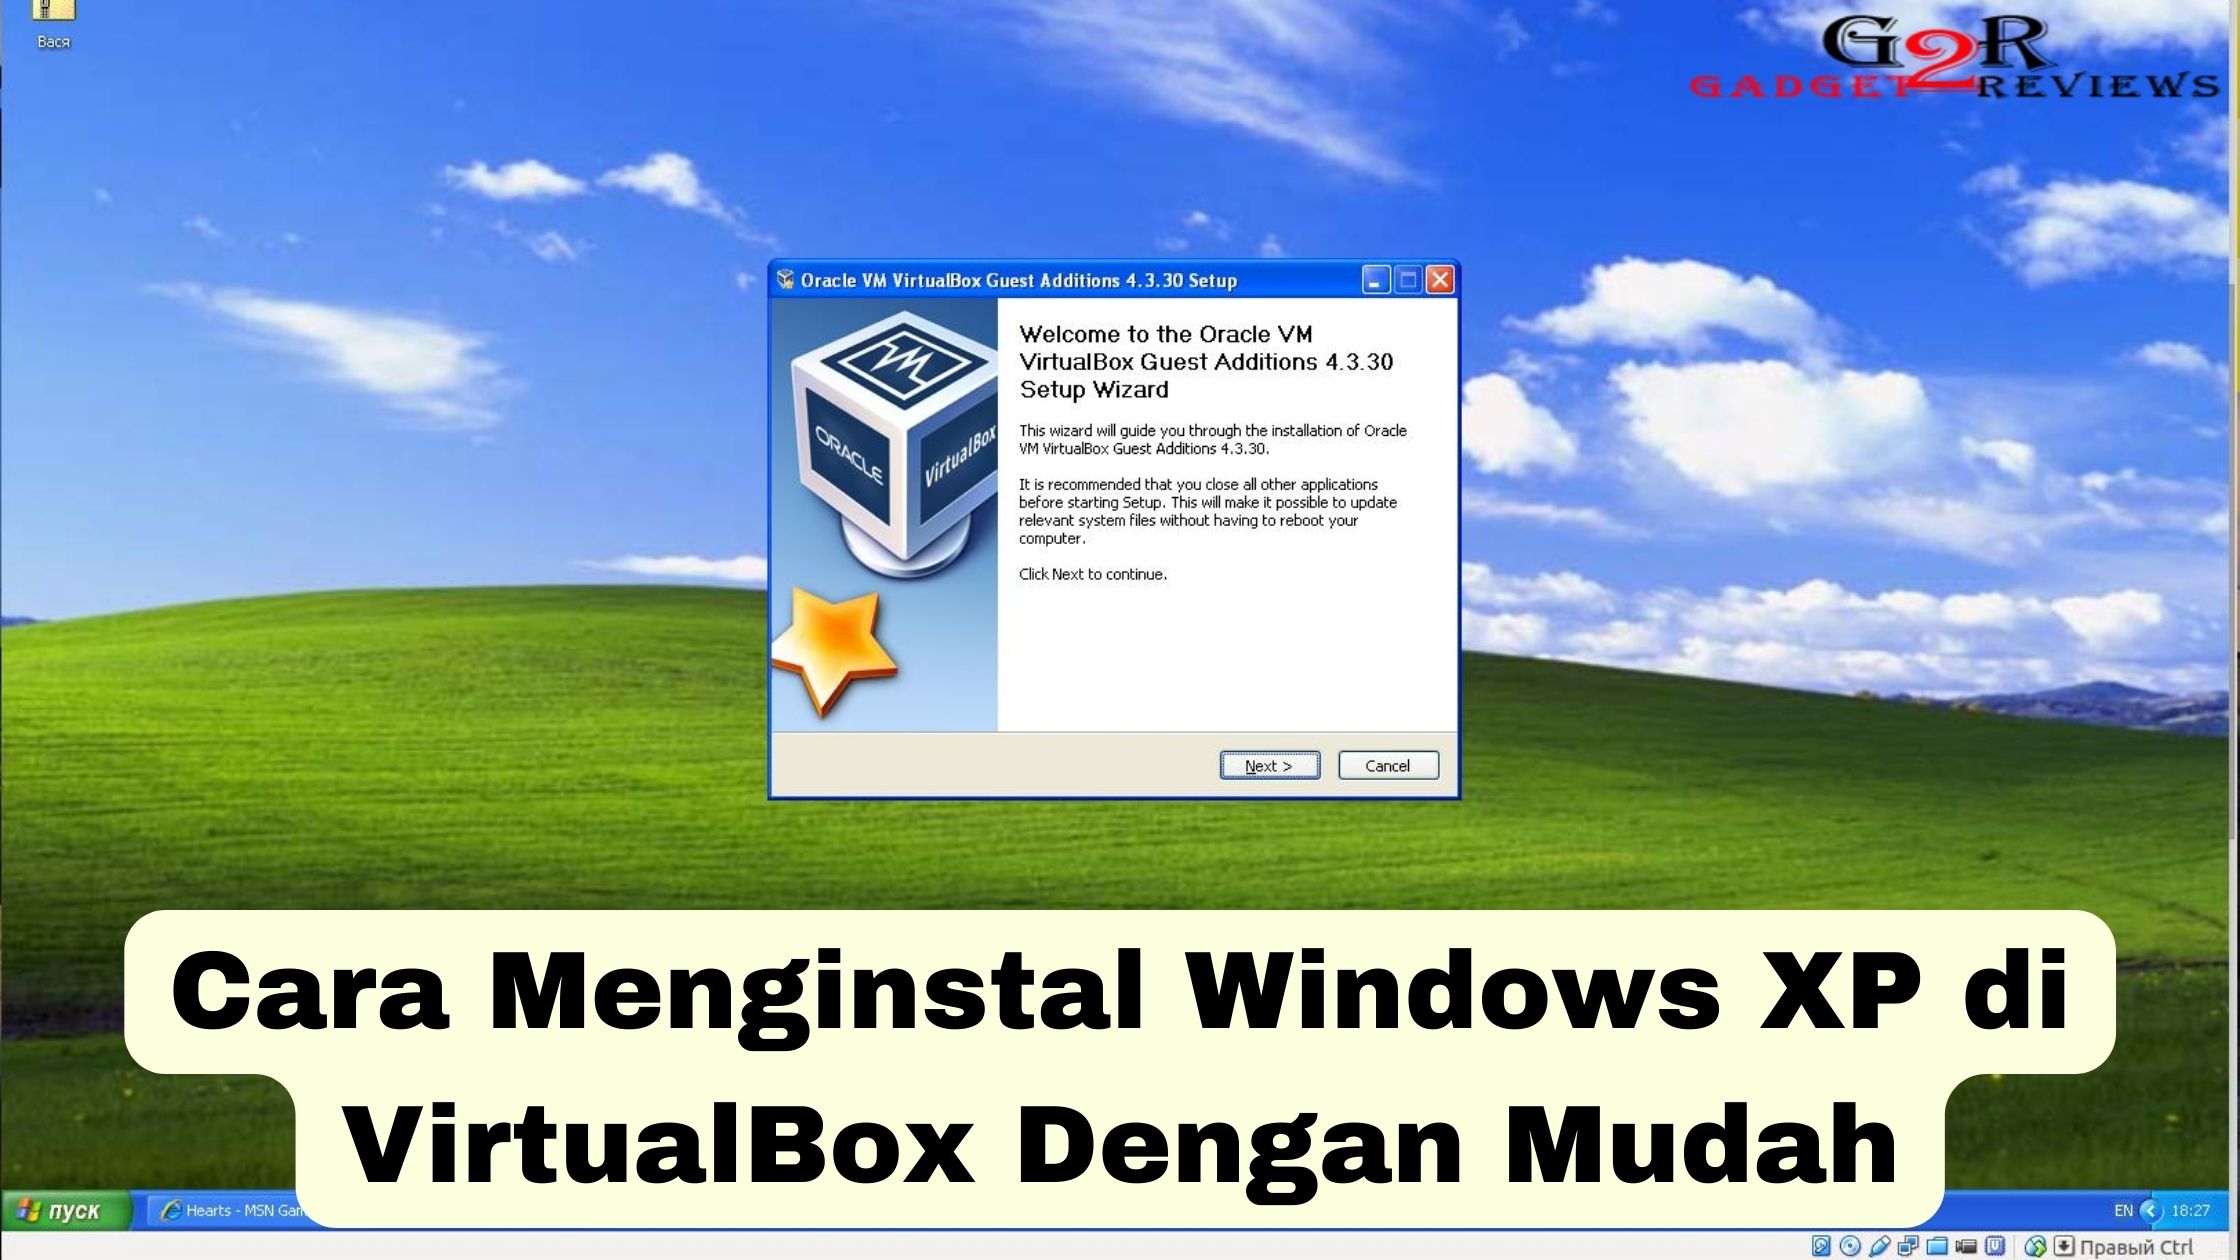 Cara Menginstal Windows XP di VirtualBox